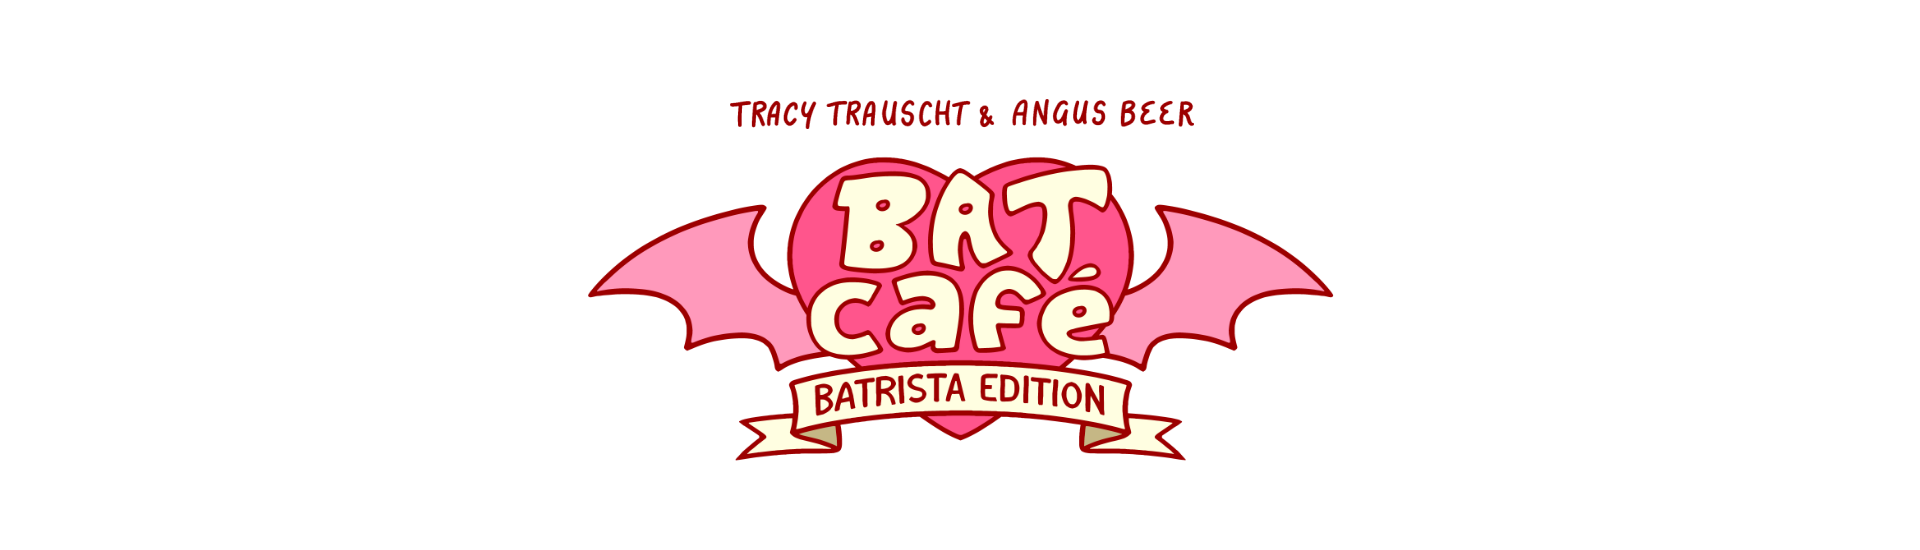 Bat Cafe: Batrista Edition